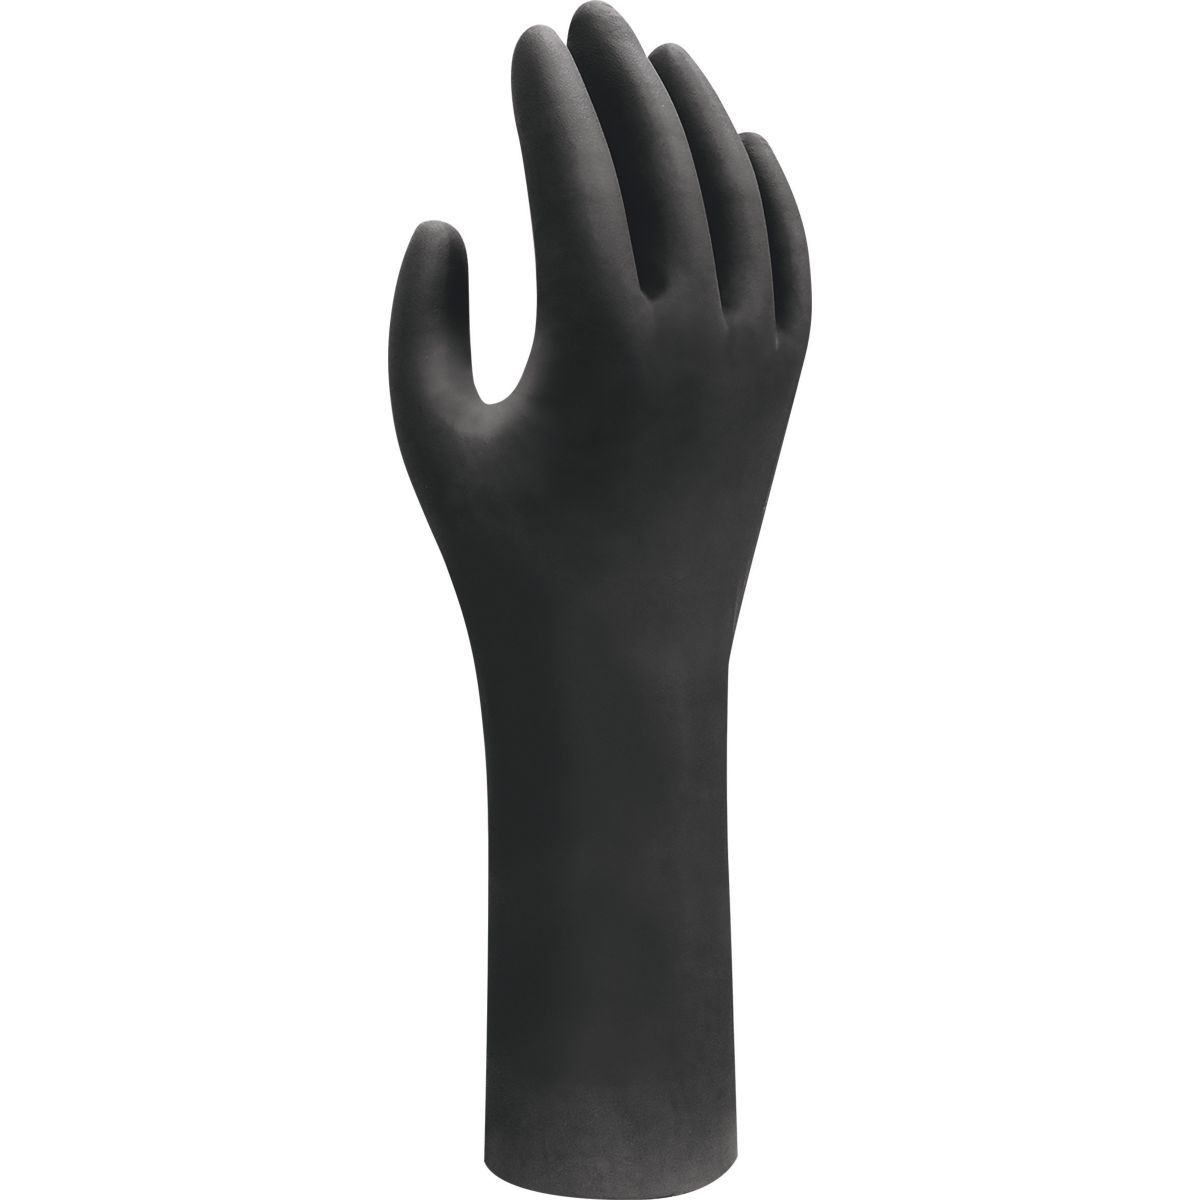 Black biodegradable nitrile glove